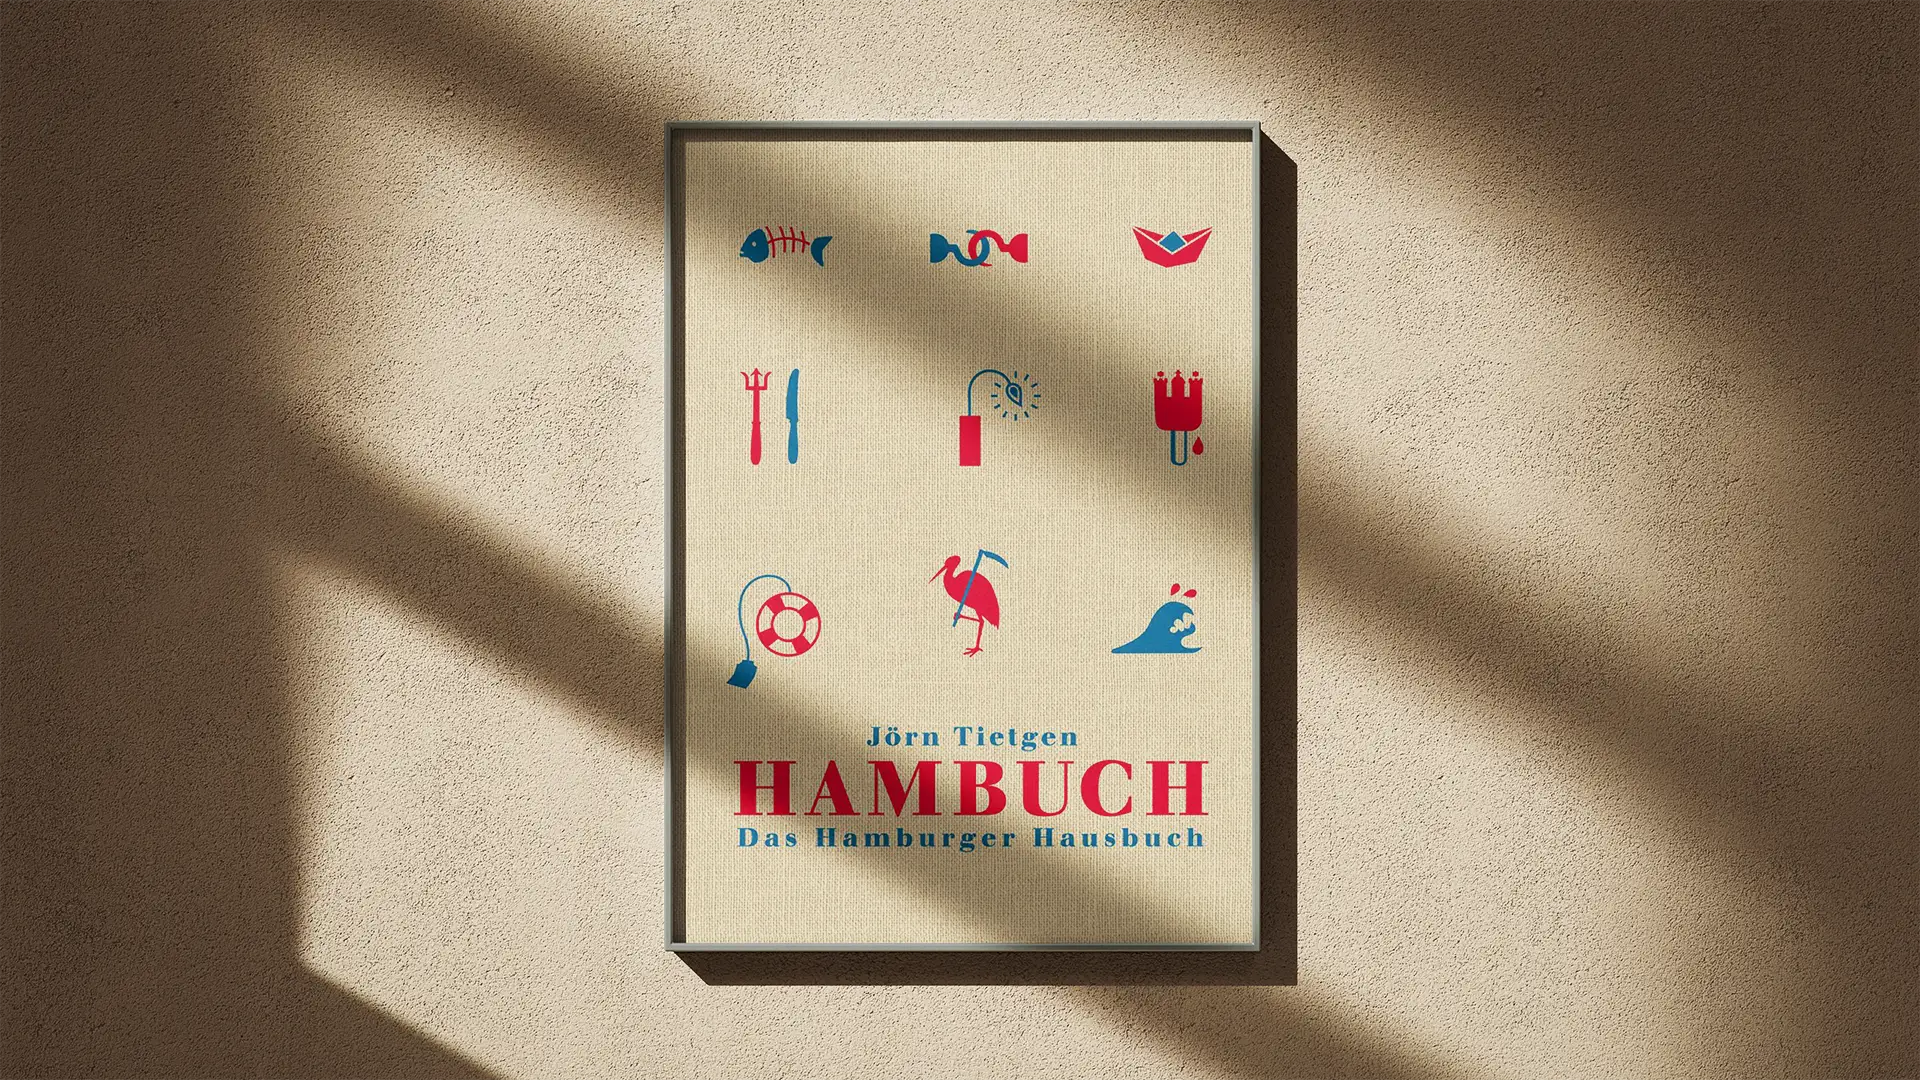 Hambuch - Das Hamburger Hausbuch